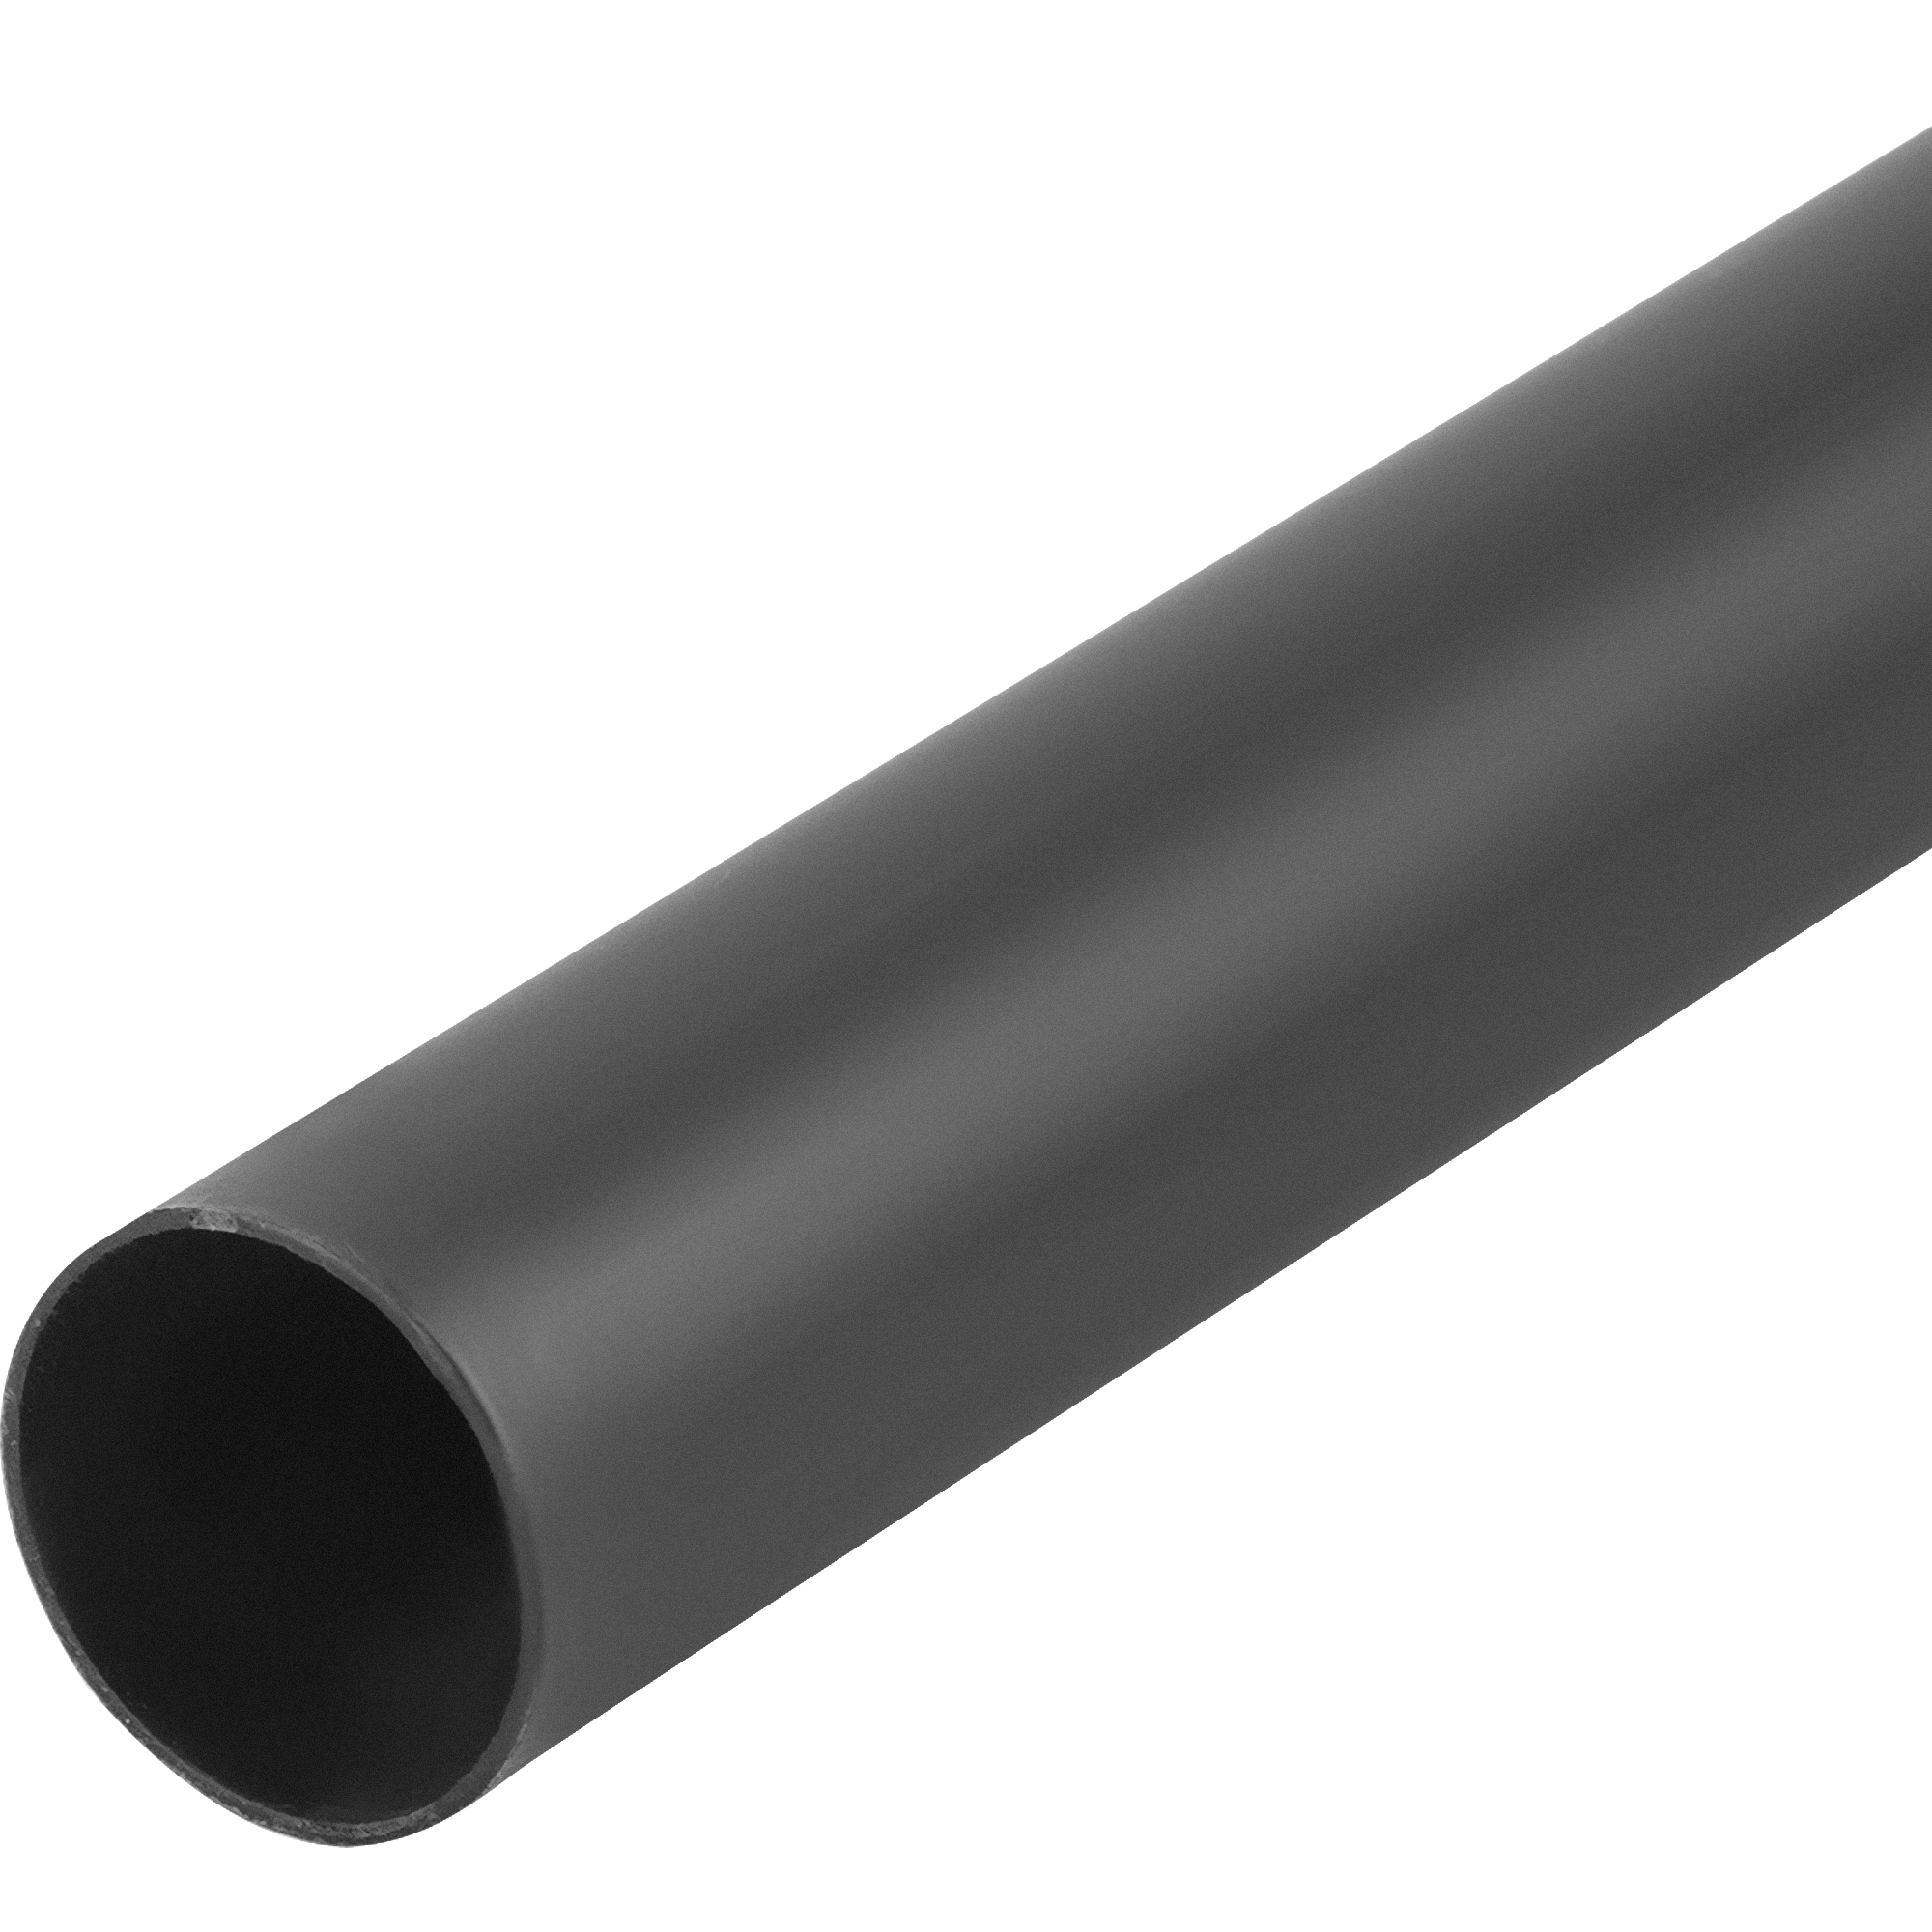 Труба Palladium 25х0.8 мм 1 м цвет черный